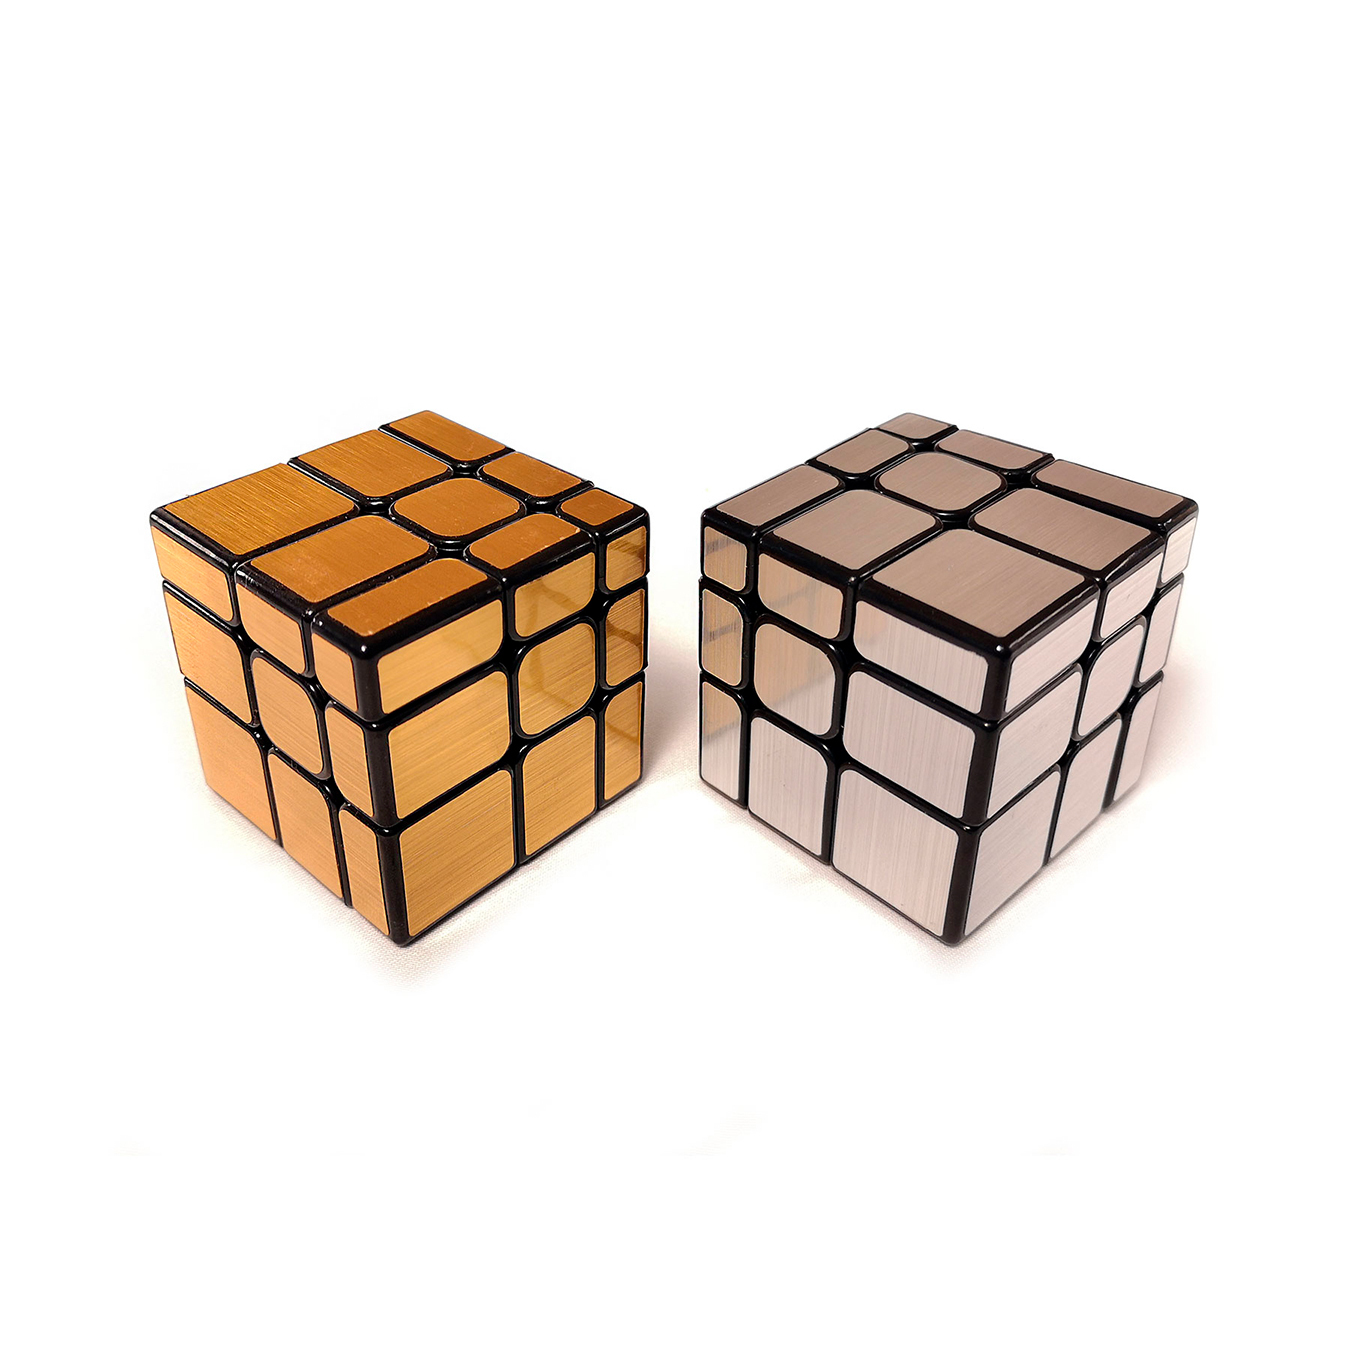 Cube go. Магический куб 3х3х3. Зеркальный кубик Рубика 3х3. Зеркальный кубик 2х2 серебро. Сборка зеркального кубика 3х3.